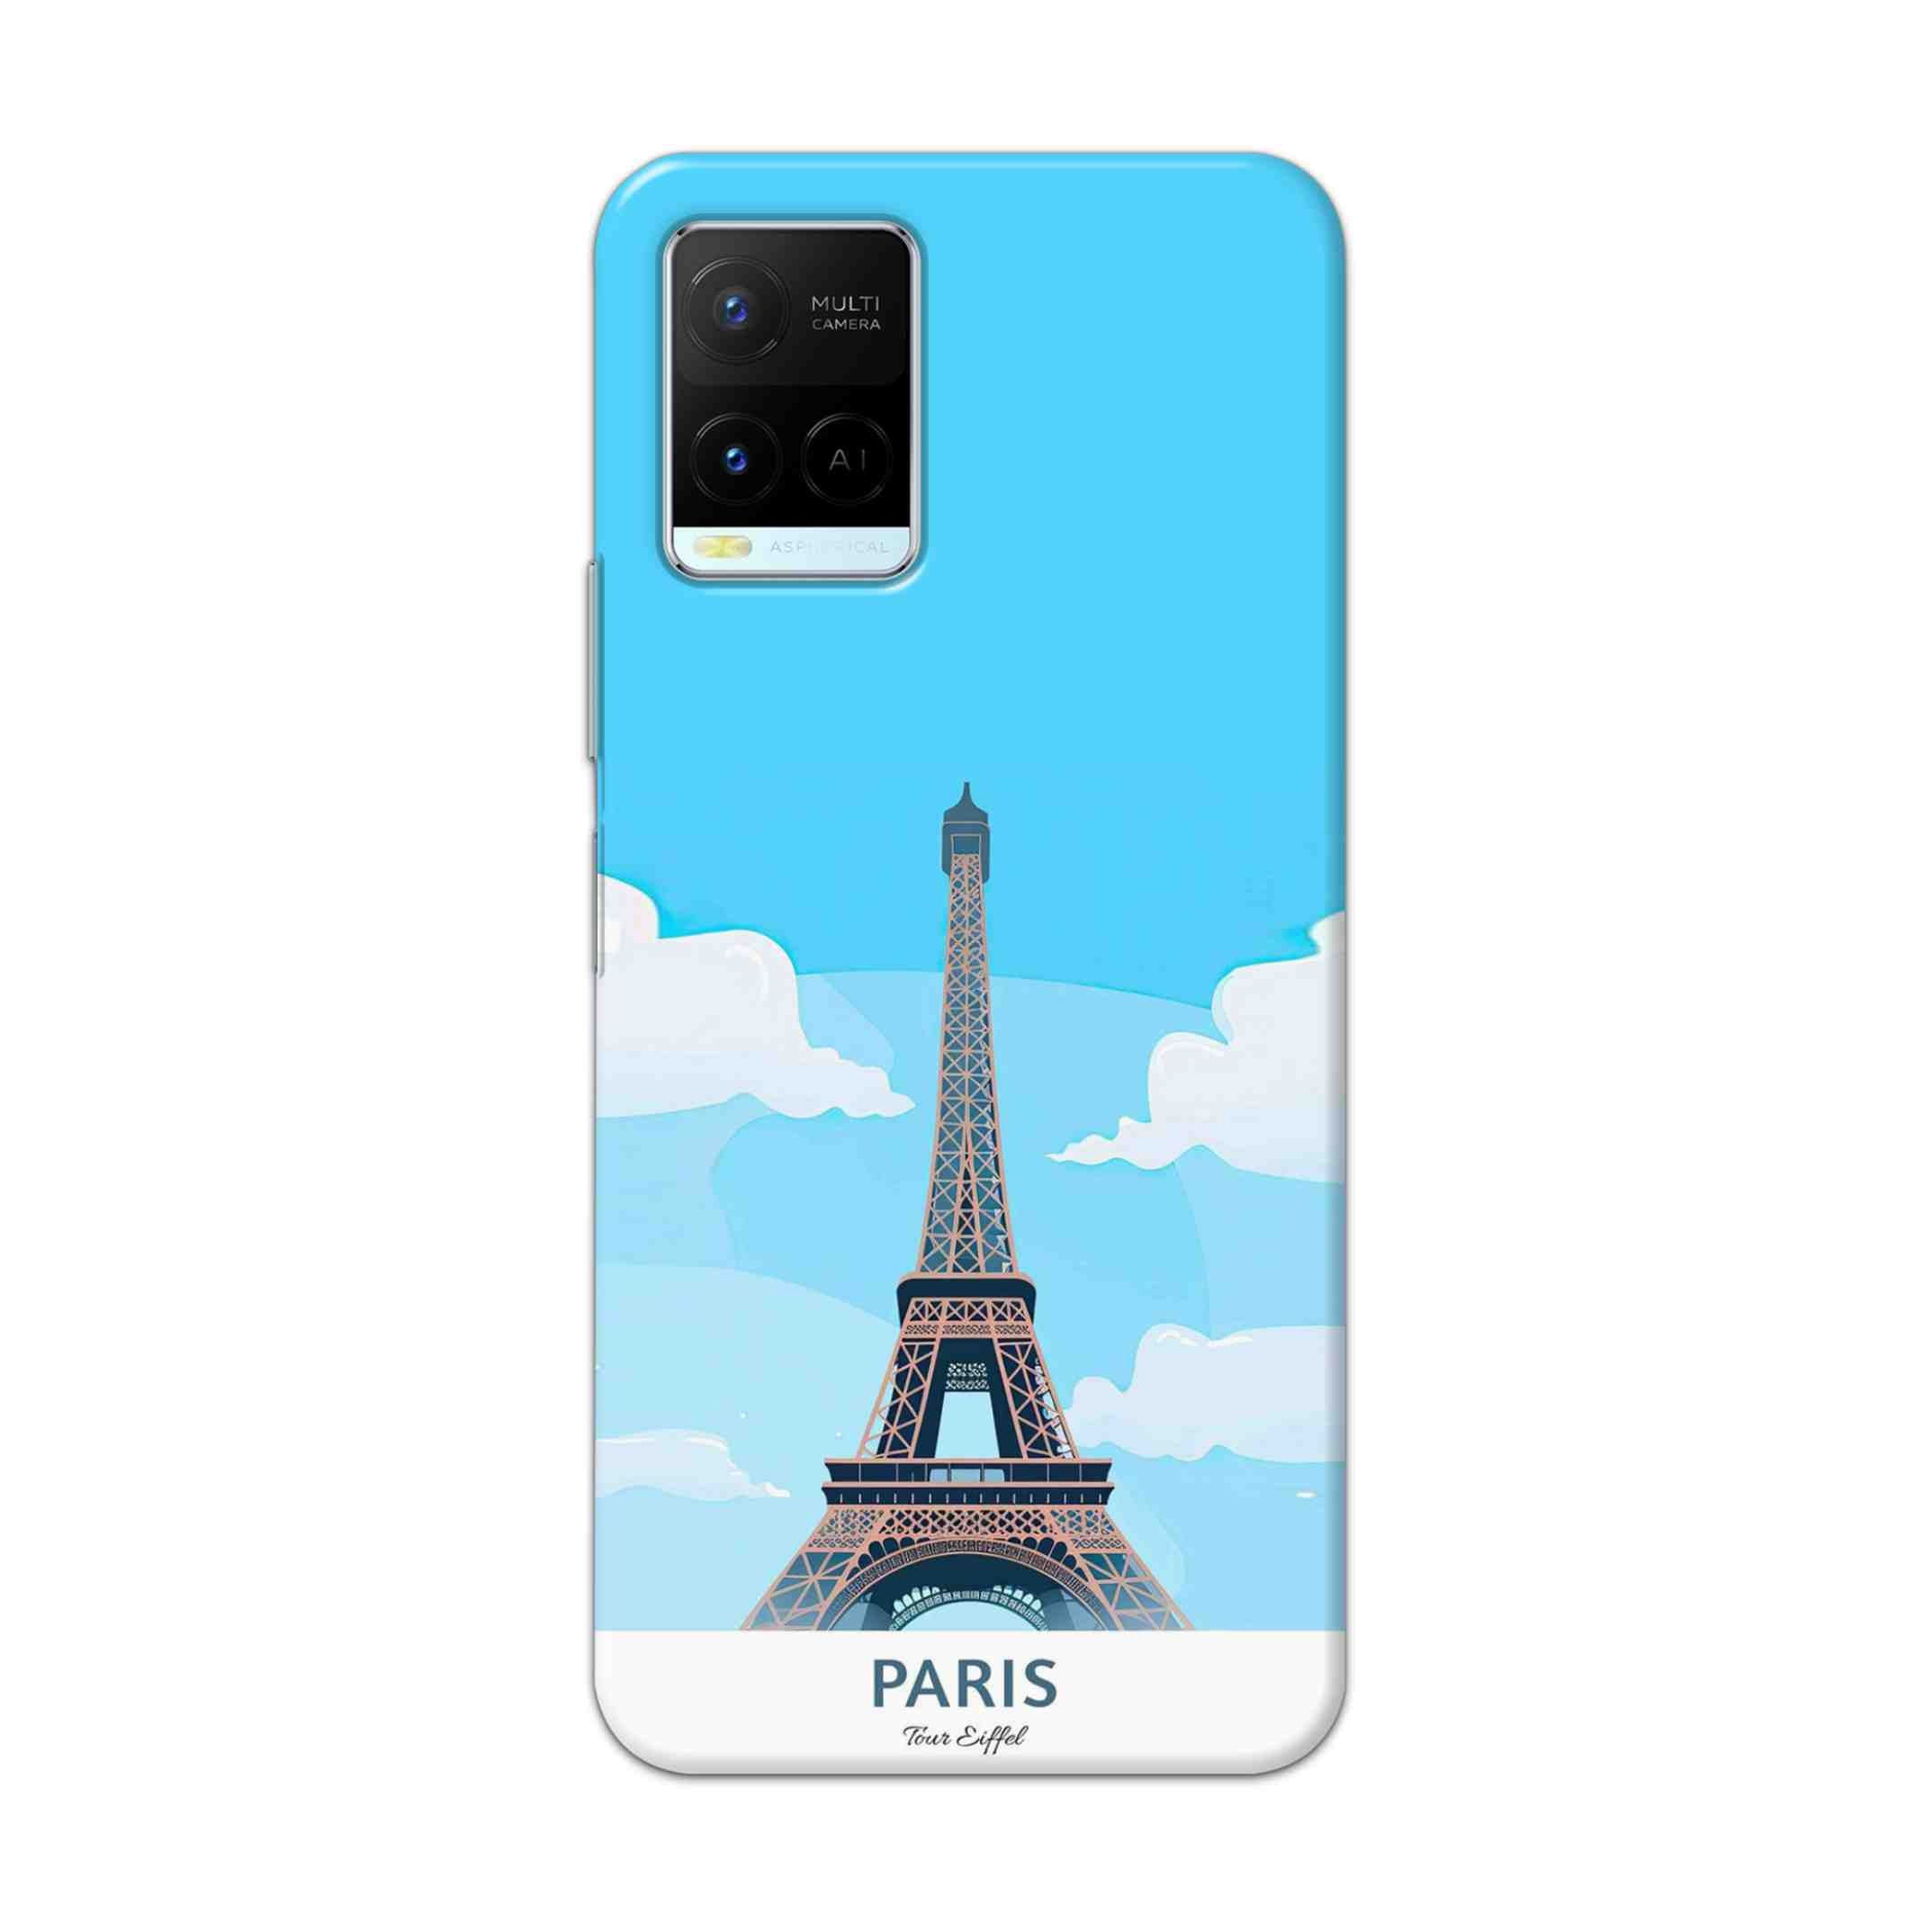 Buy Paris Hard Back Mobile Phone Case Cover For Vivo Y21 2021 Online